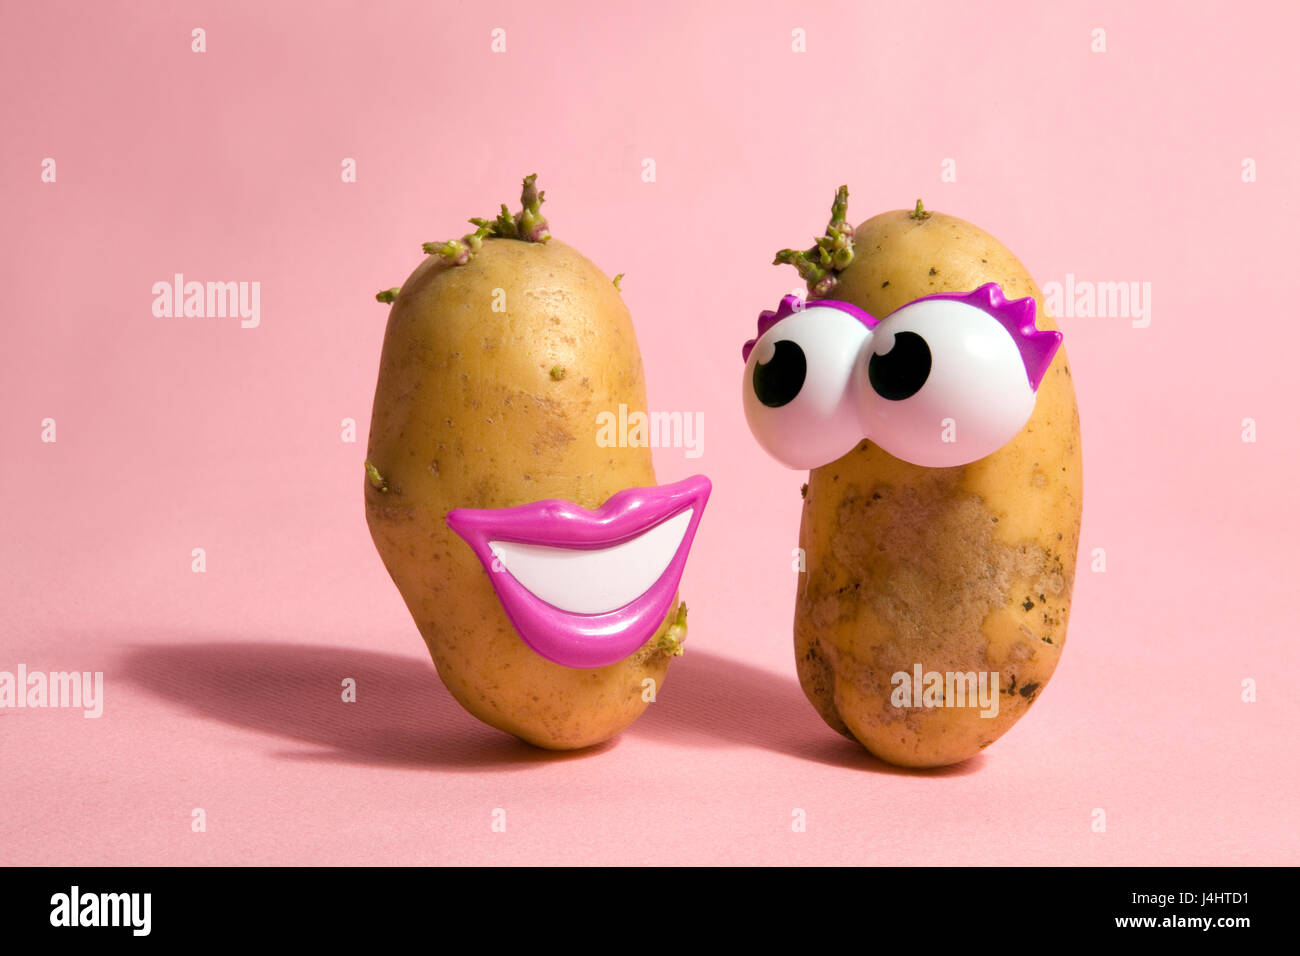 a pop and minimal potato portrait on a pink background Stock Photo